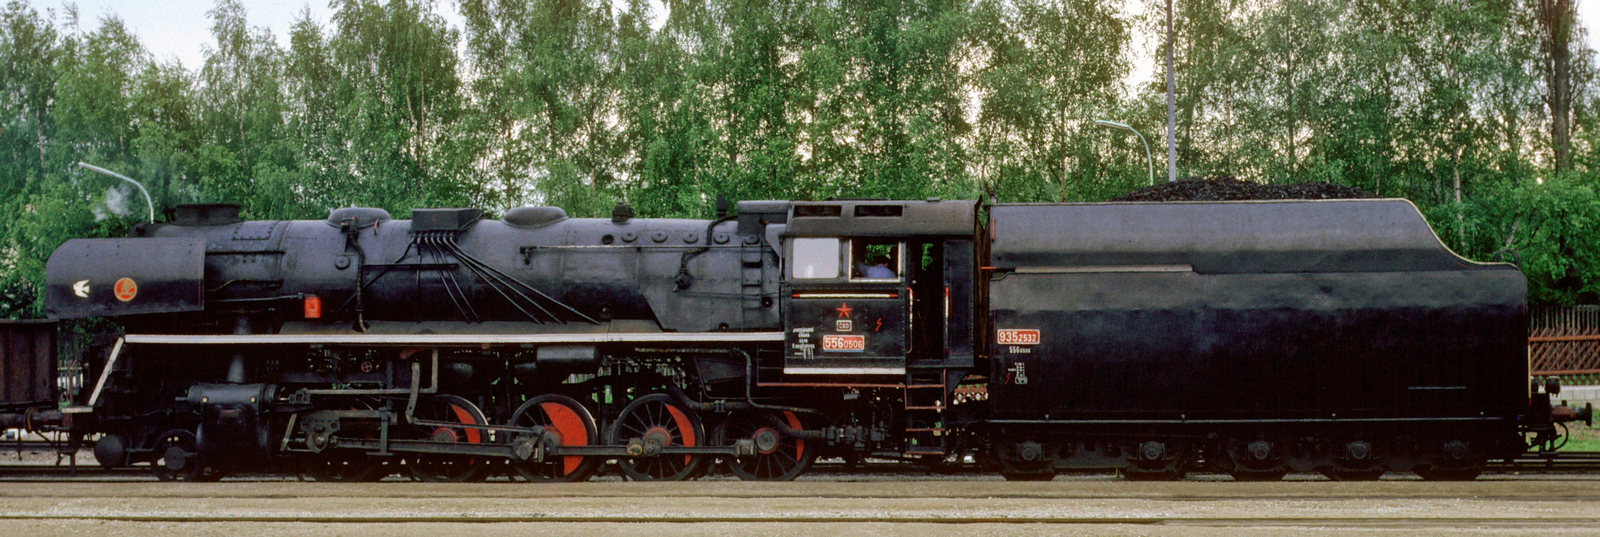 556.0506 in May 1979 in Gmünd, Lower Austria